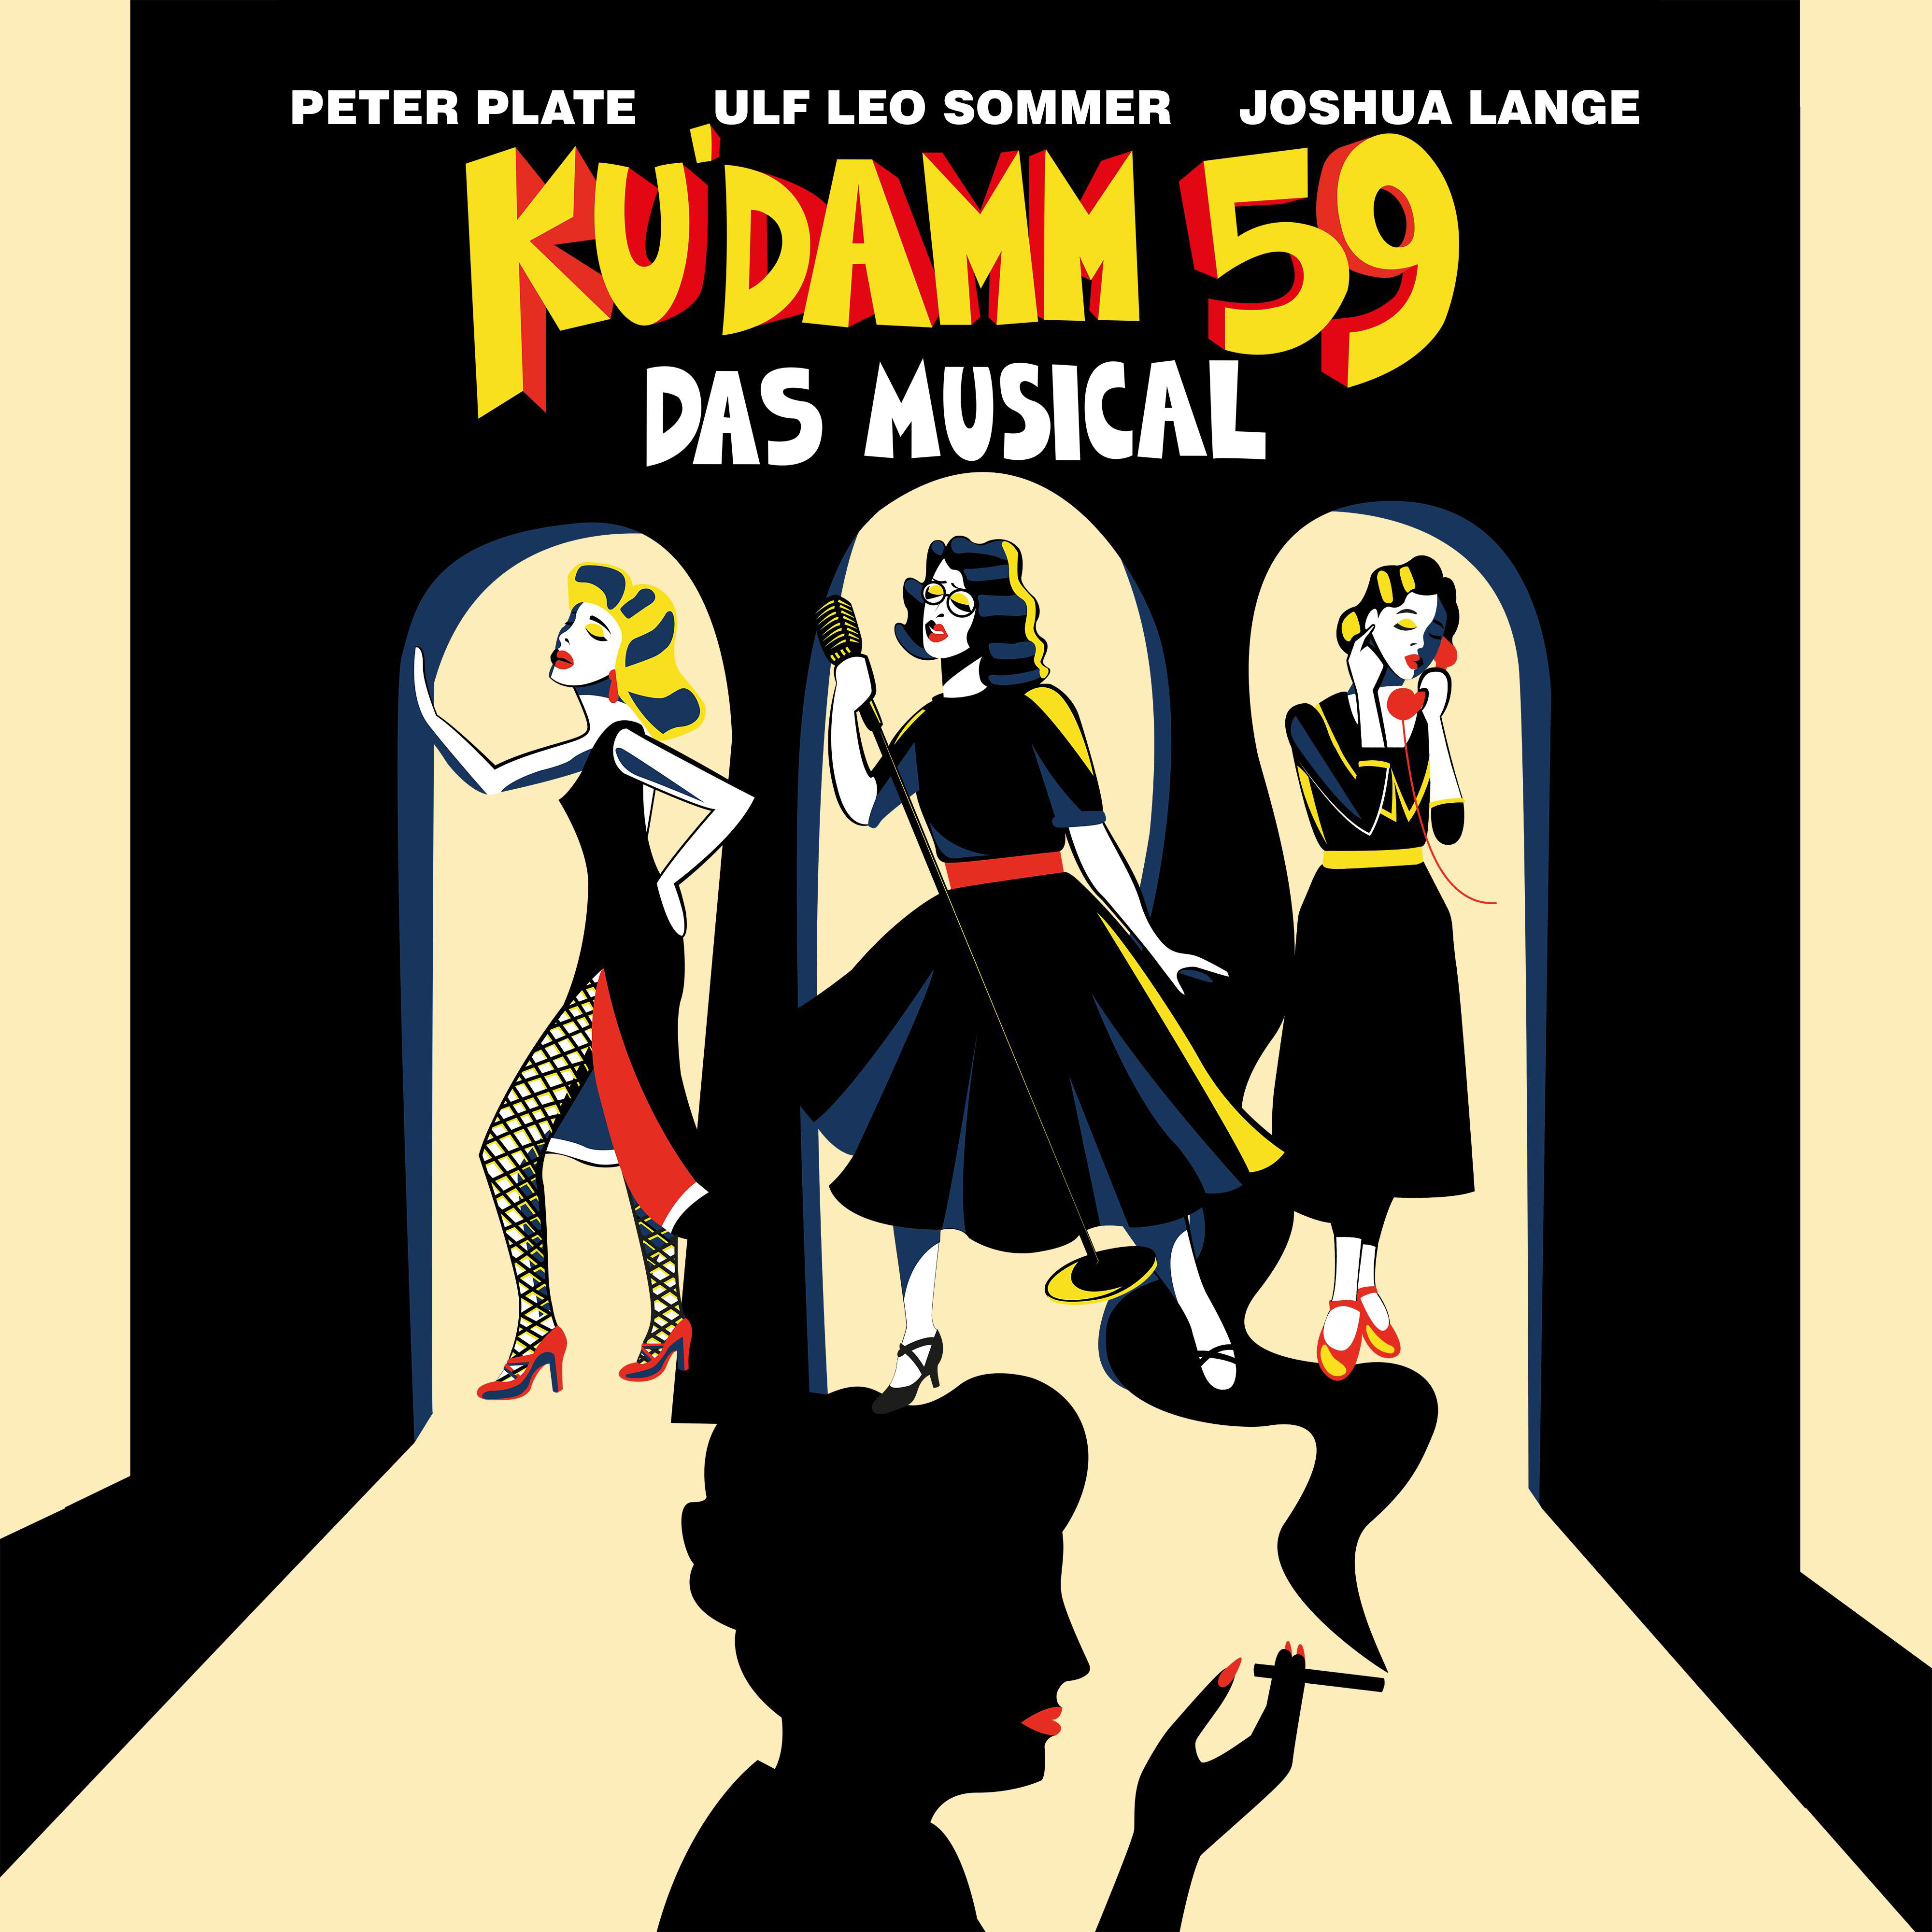 Ku\'damm - Musical - - 59 Das (Vinyl) Leo&Lange,Joshua Plate,Peter&Sommer,Ulf